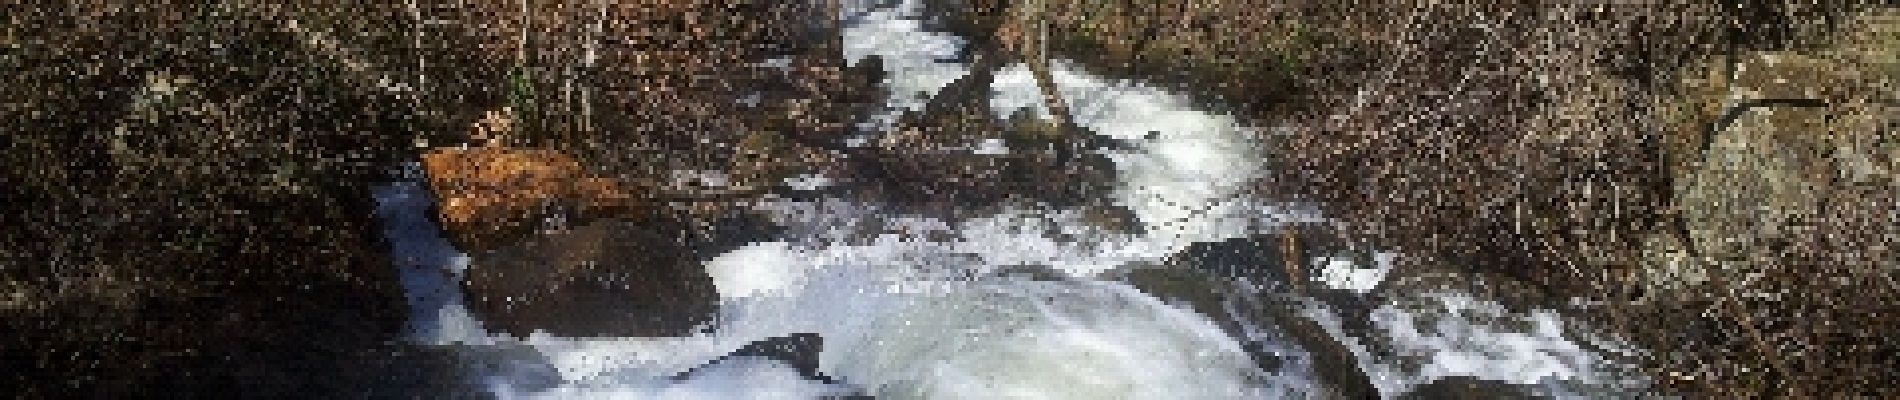 POI Saissac - cascade lac des cammazes - Photo